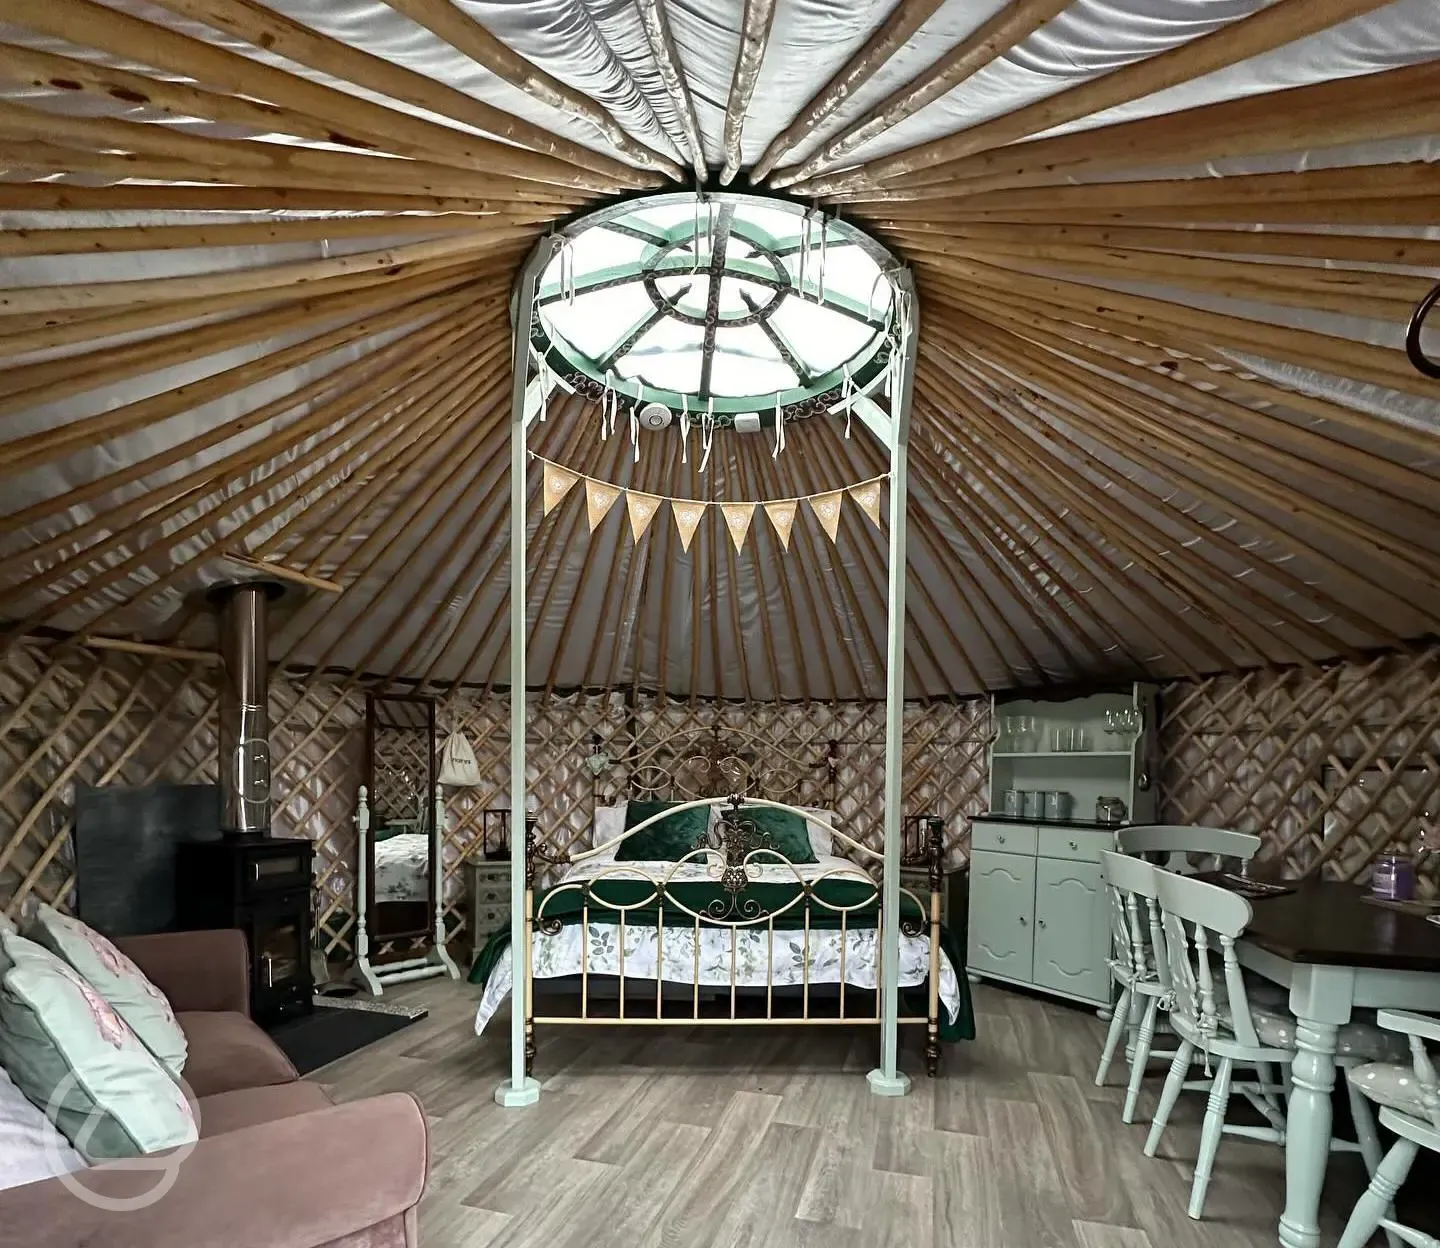 Horse Chestnut yurt with hot tub interior